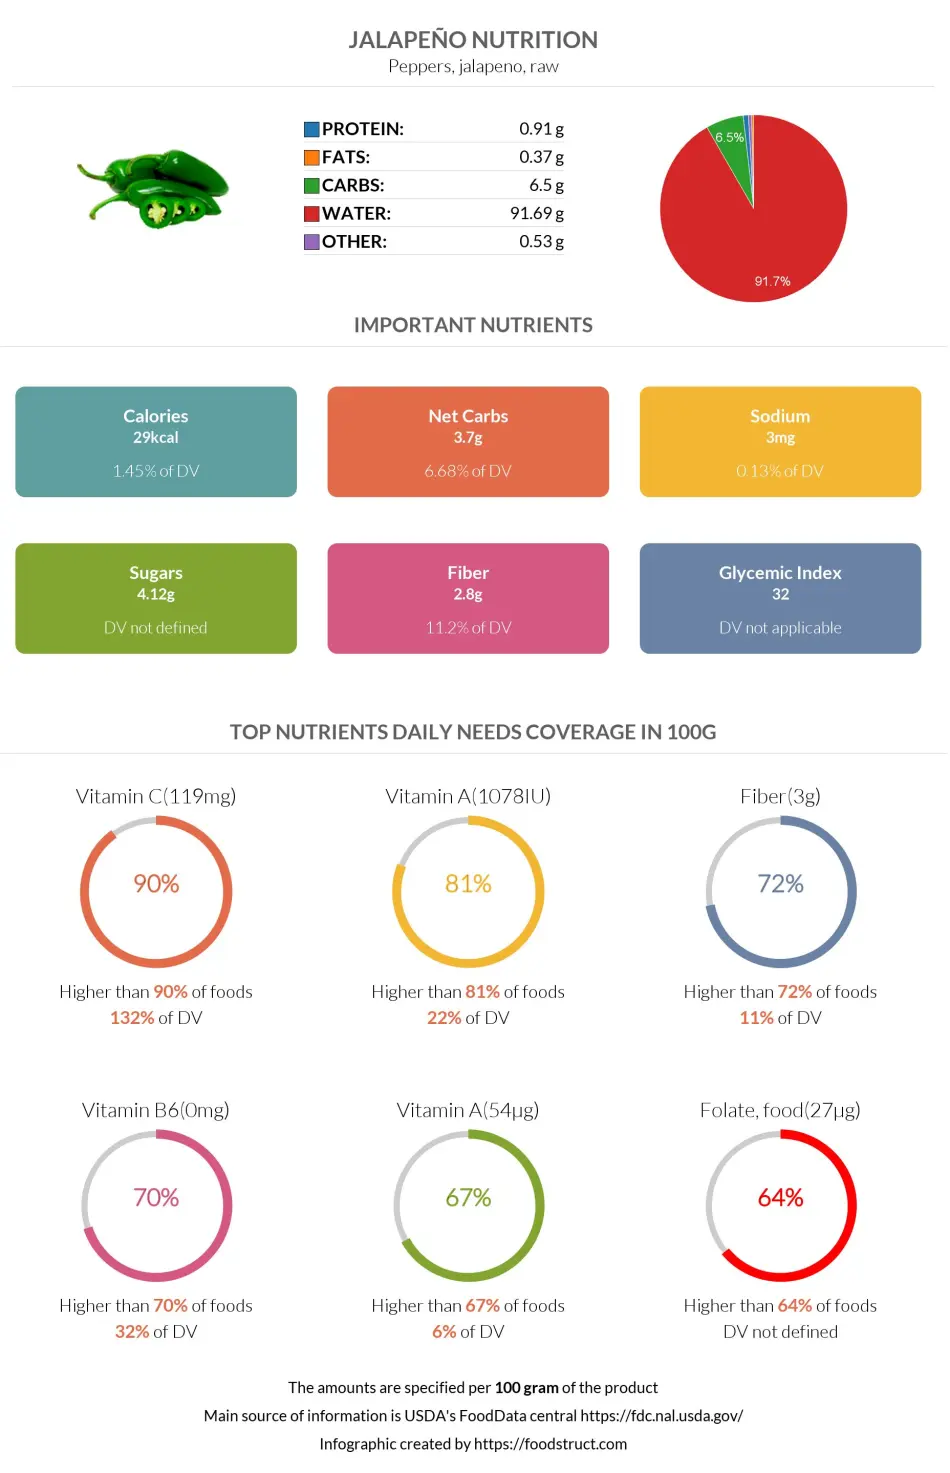 Jalapeño nutrition infographic